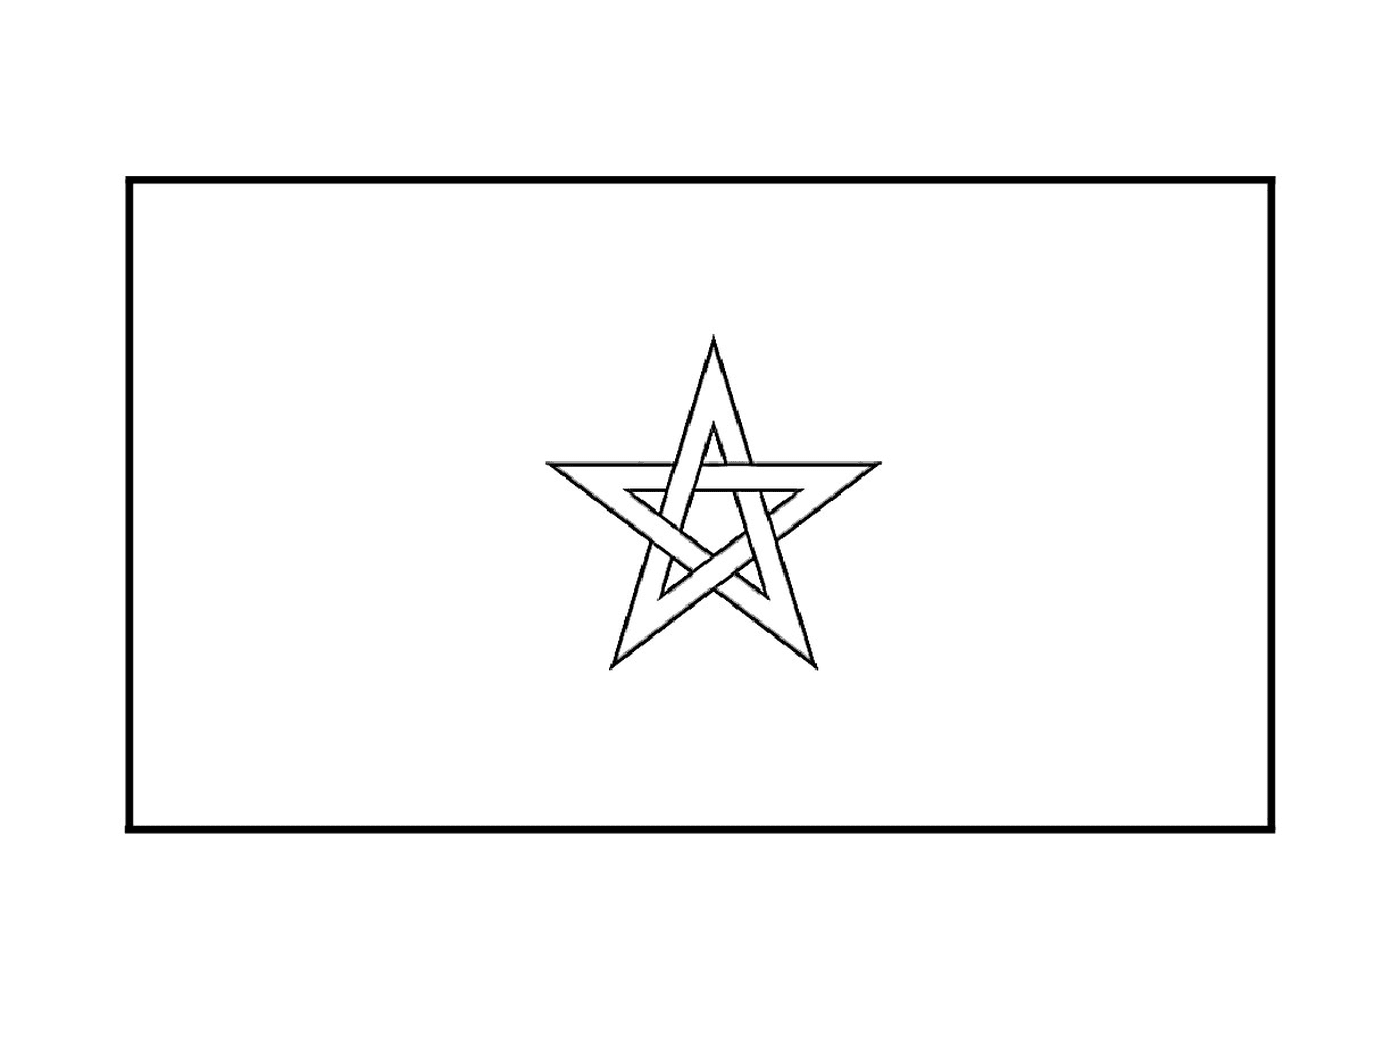  A flag of Morocco 